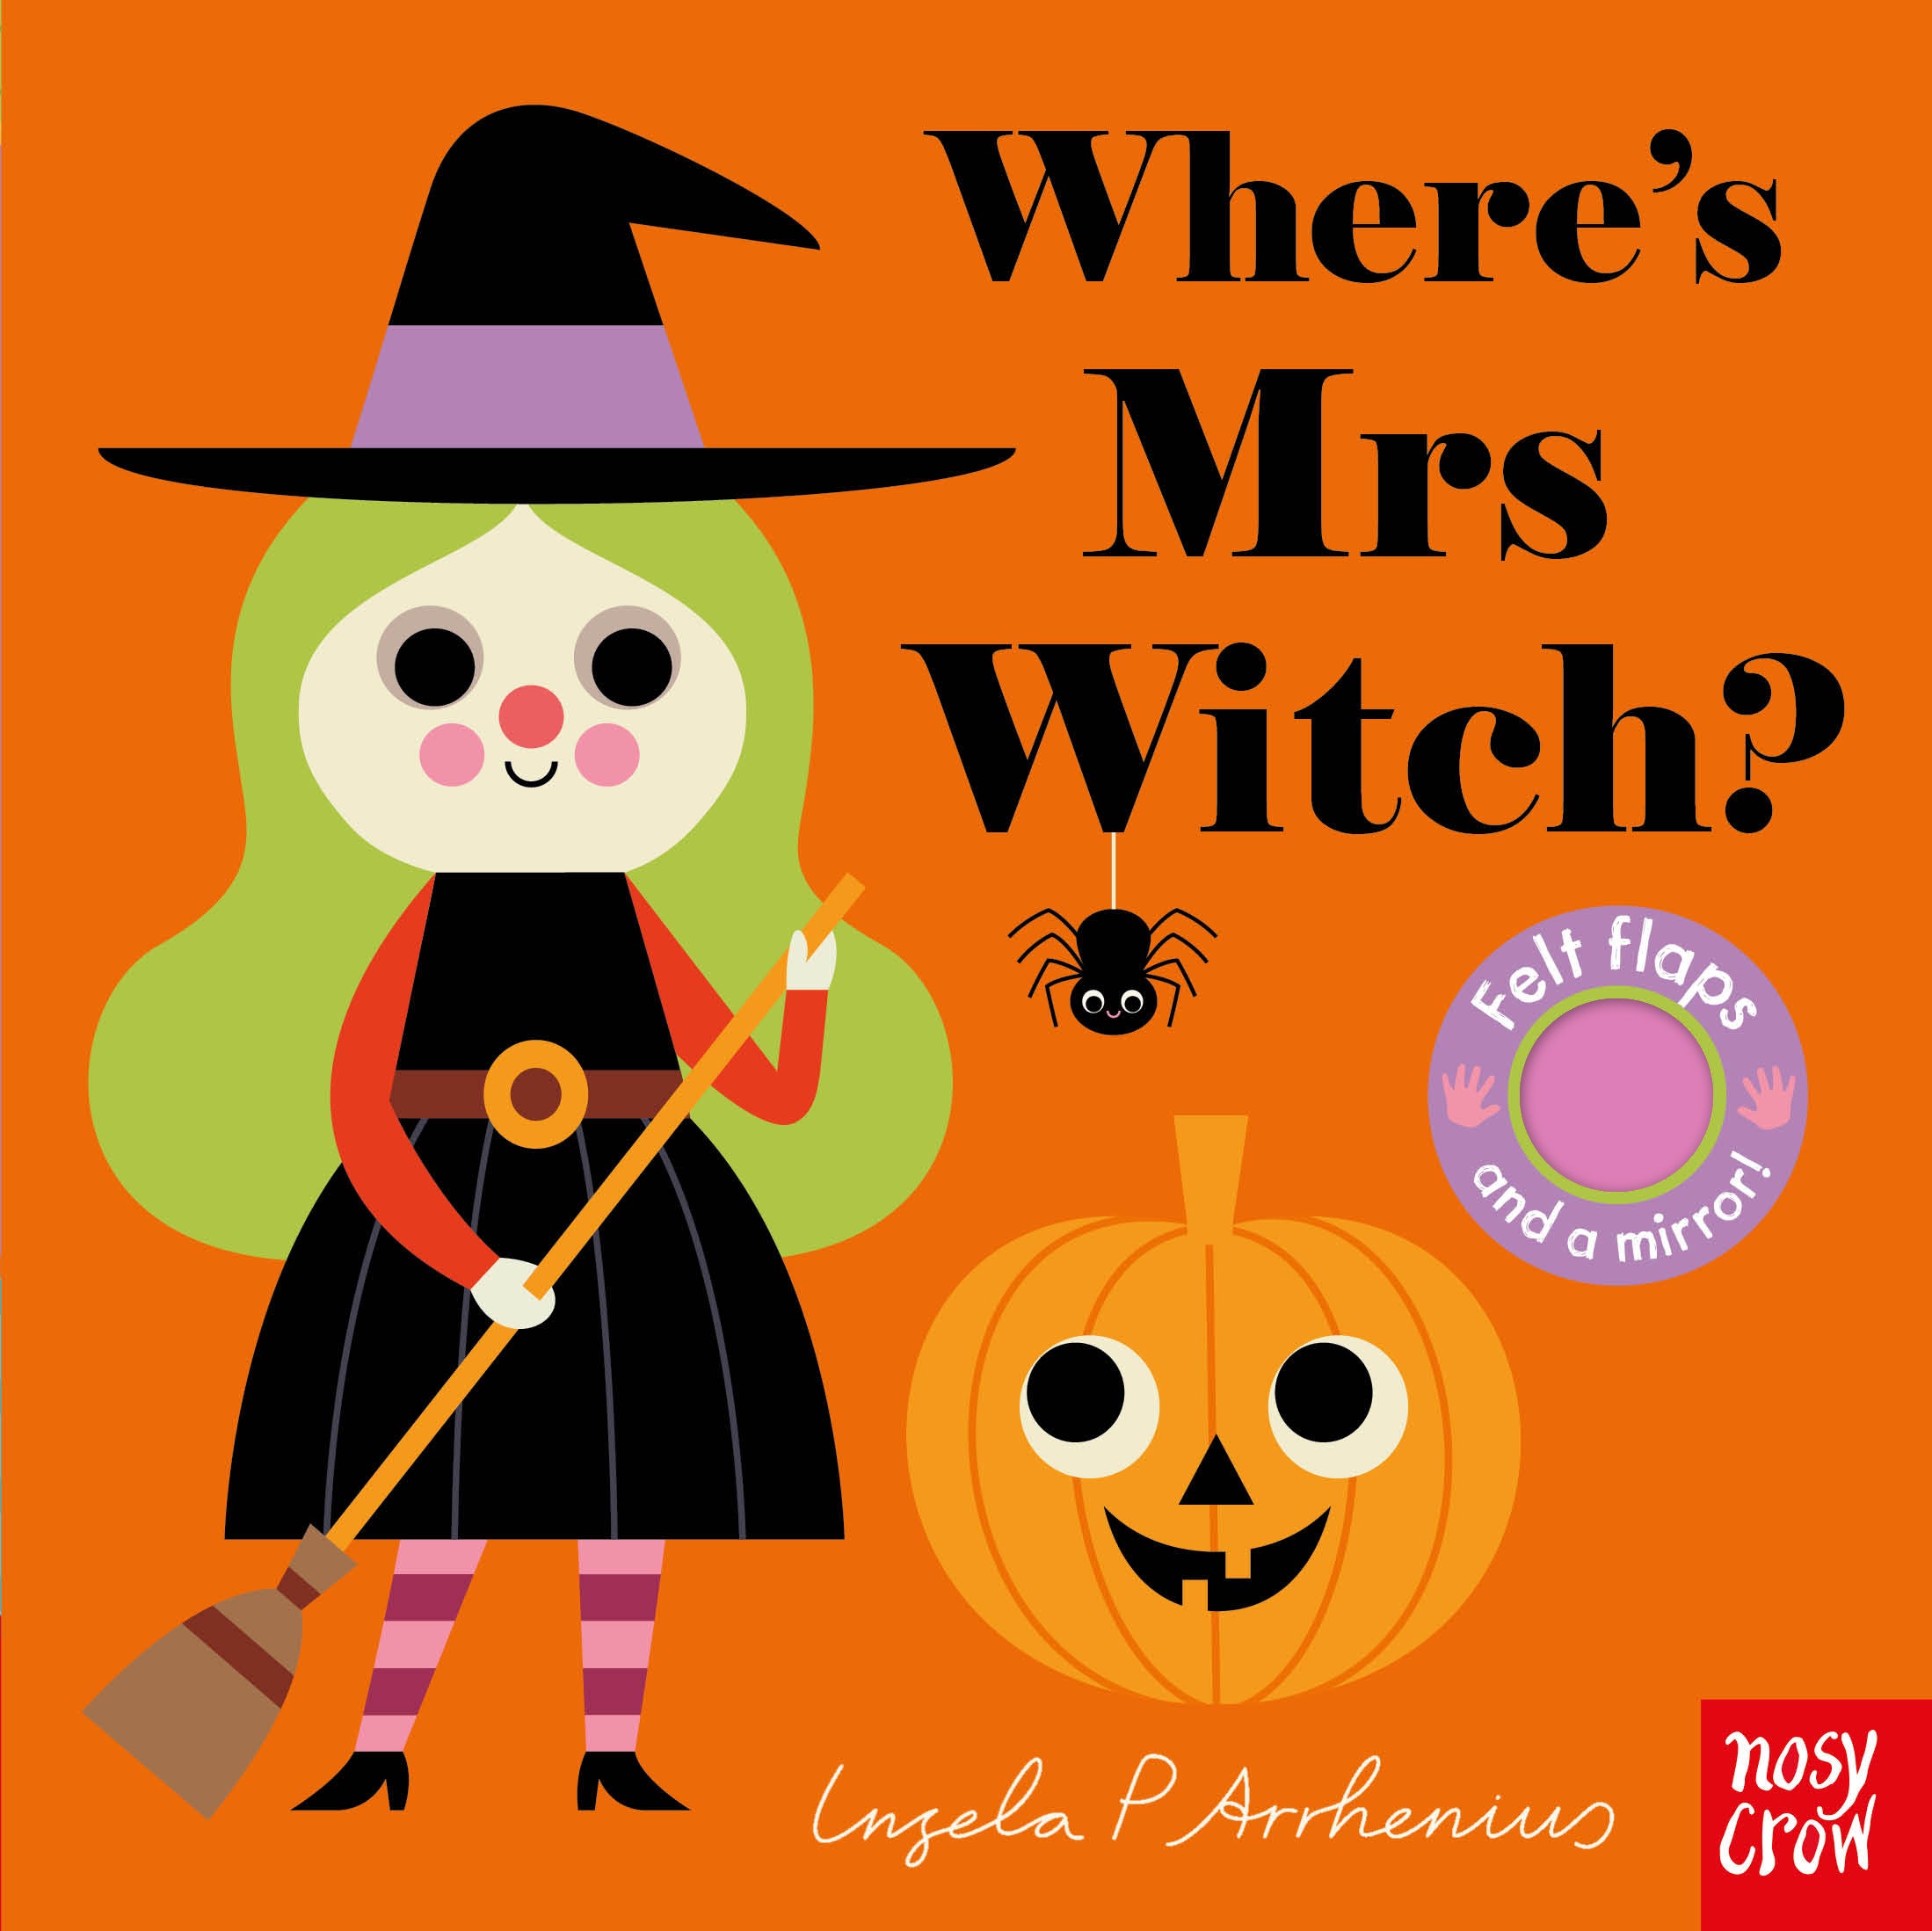 Wheres-Mrs-Witch-1027-1.jpg